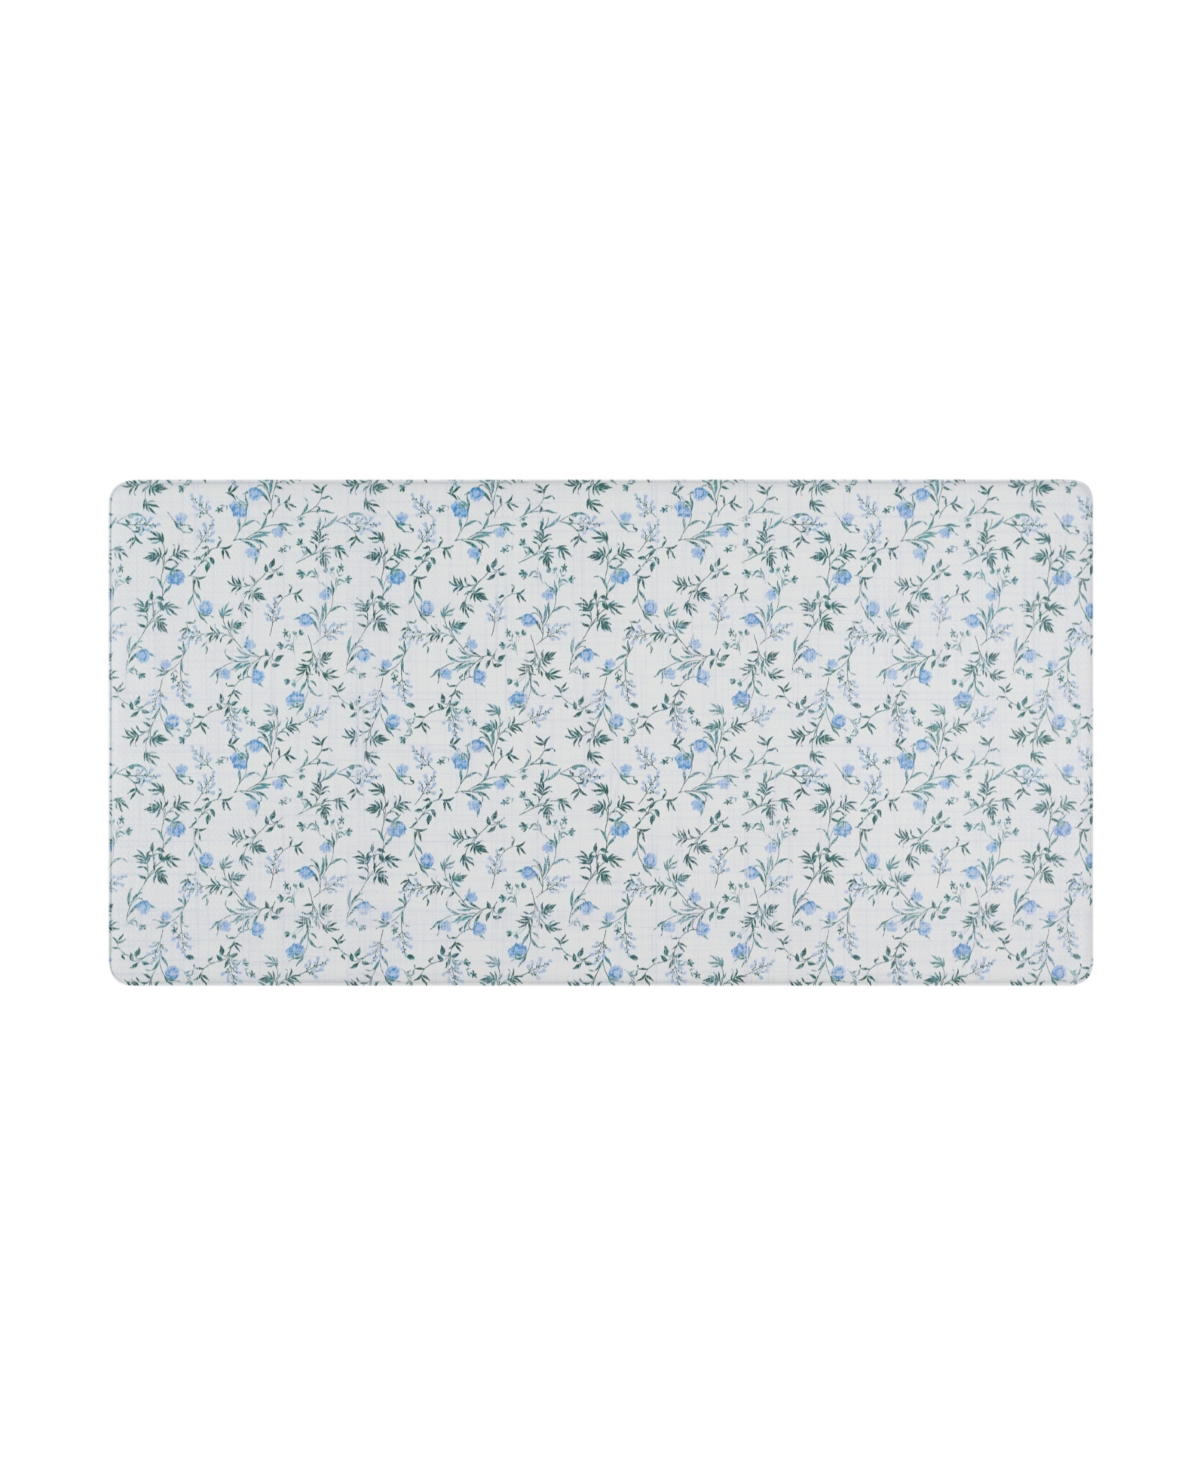 Seda Floral Printed Anti-Fatigue and Skid-Resistant Wellness Mat, 20" x 39" - Blue Floral